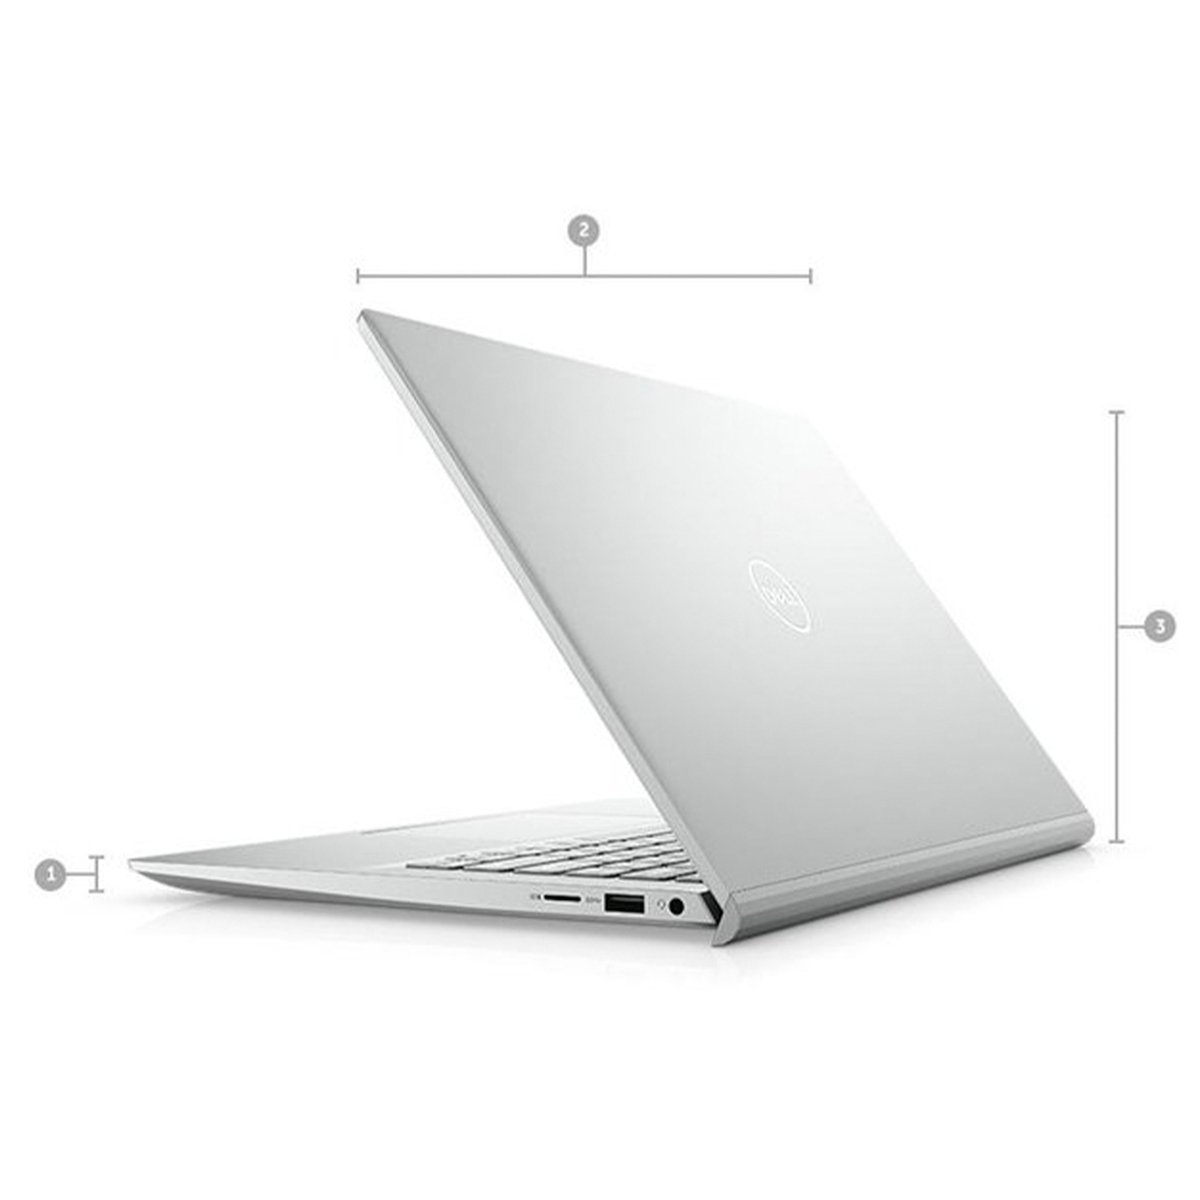 Dell Inspiron 5401-INS-410P-SLV Laptop,Intel Core i7,8GB RAM,512GB SSD,14" FHD,Windows 10,Silver